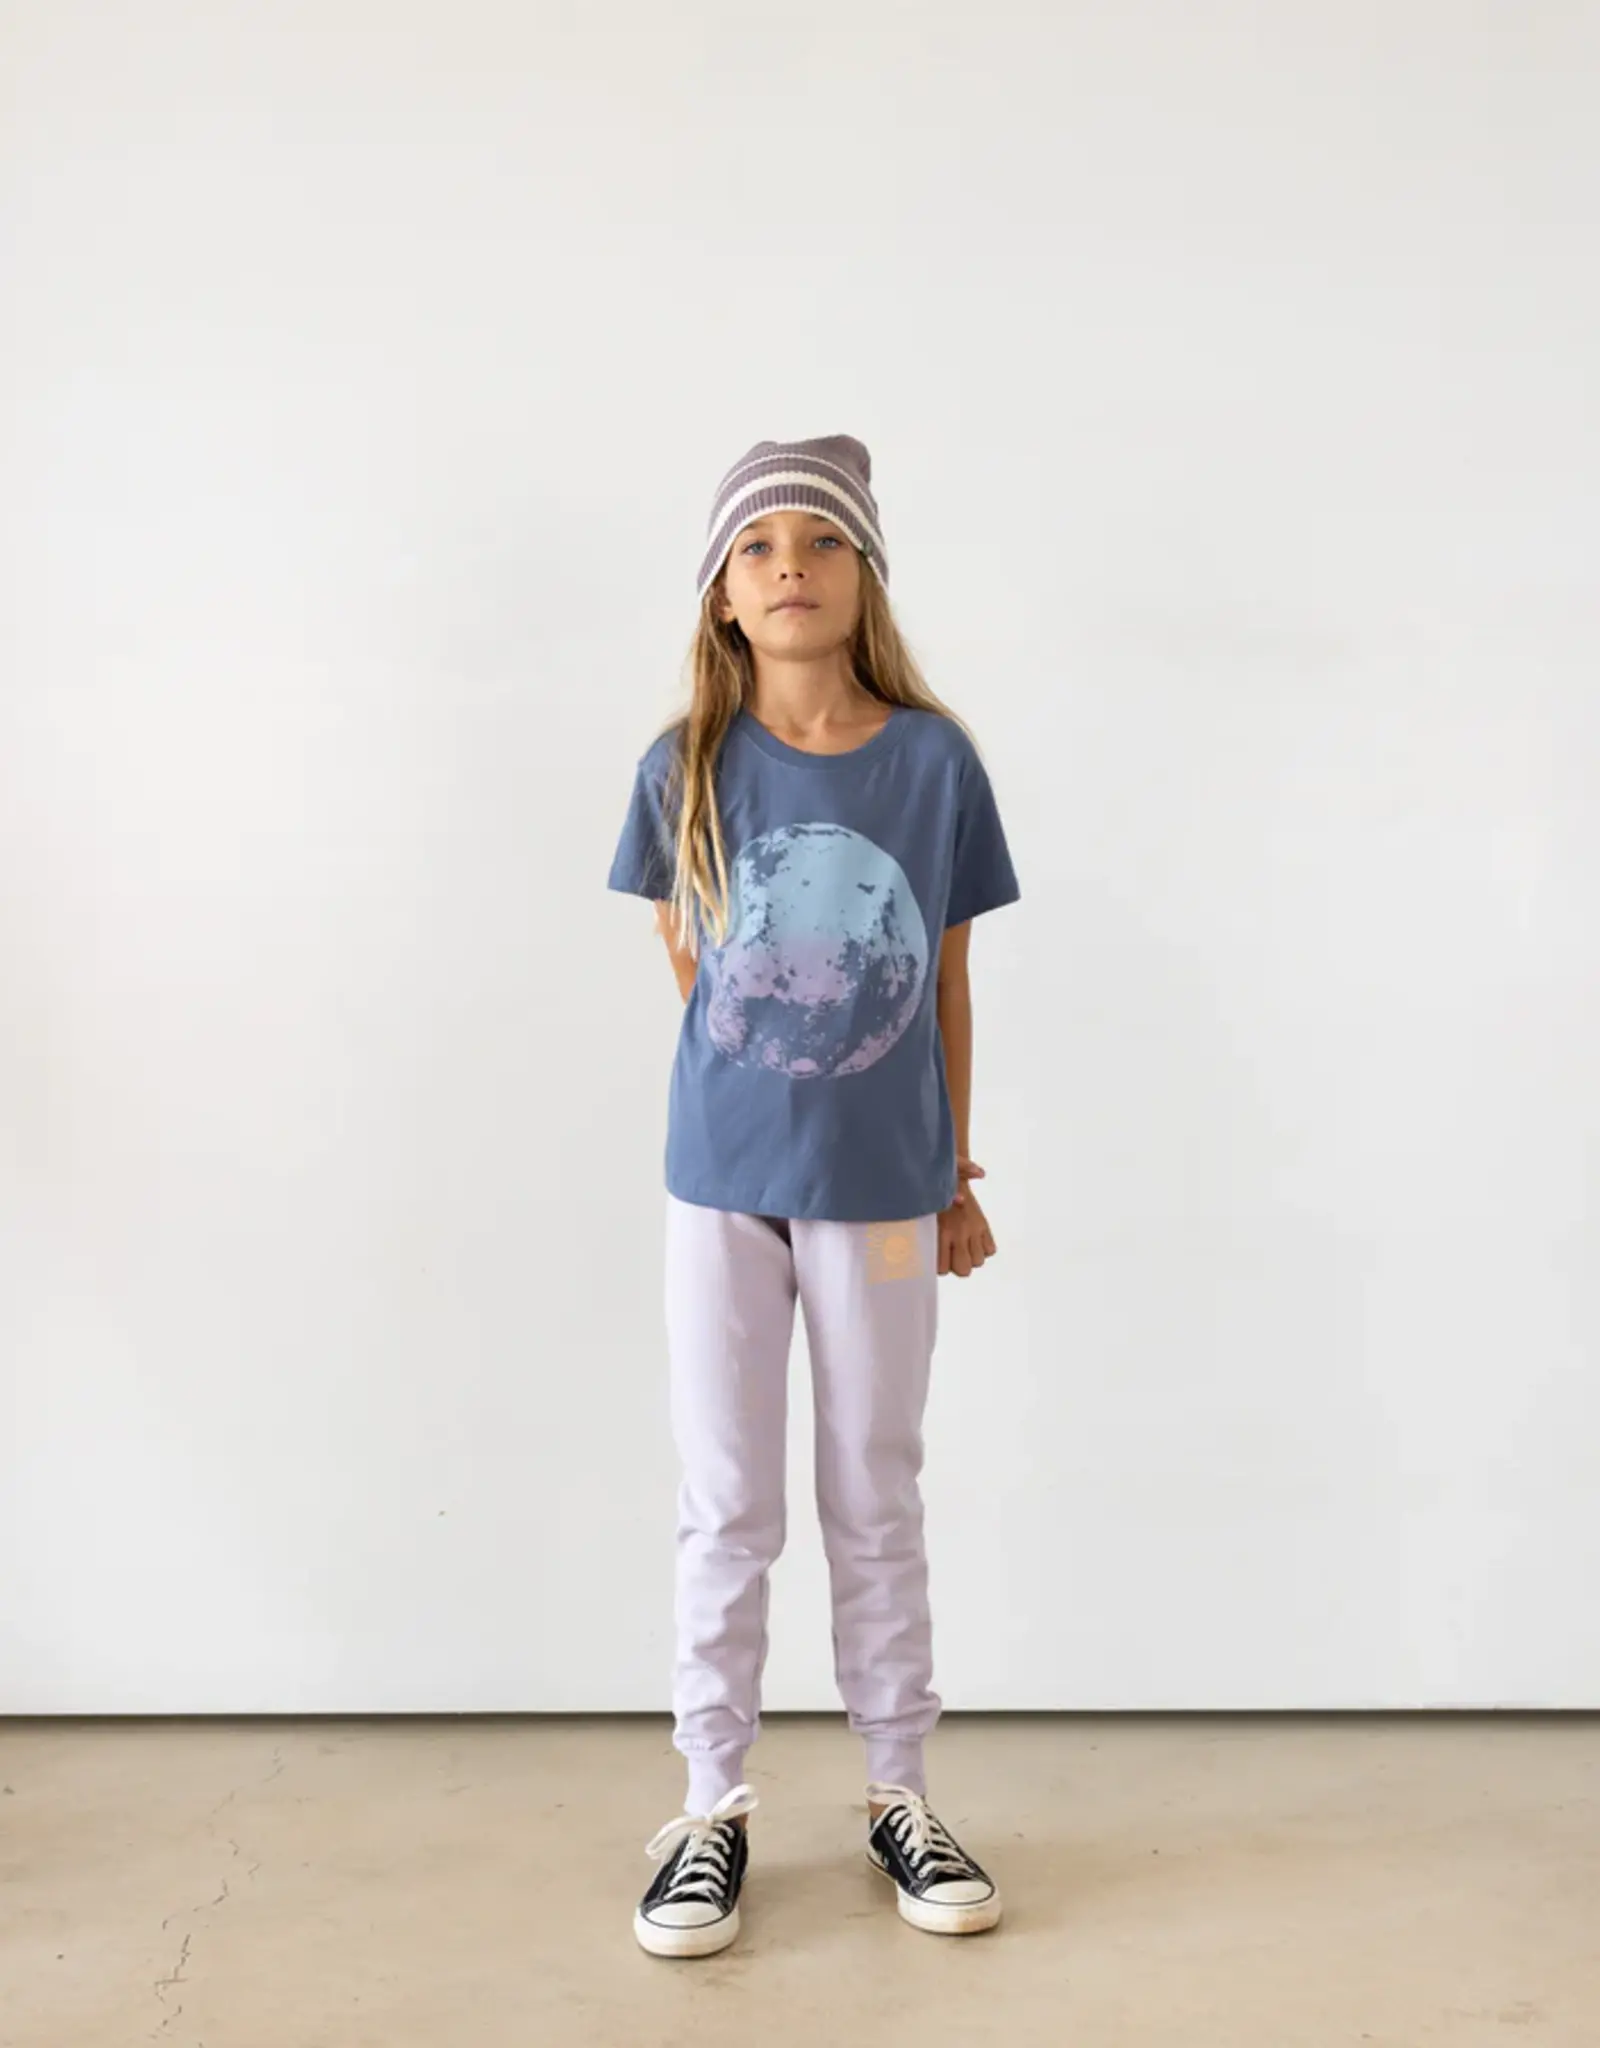 Tiny Whales 4YO: Super Moon Boxy T-Shirt - Navy